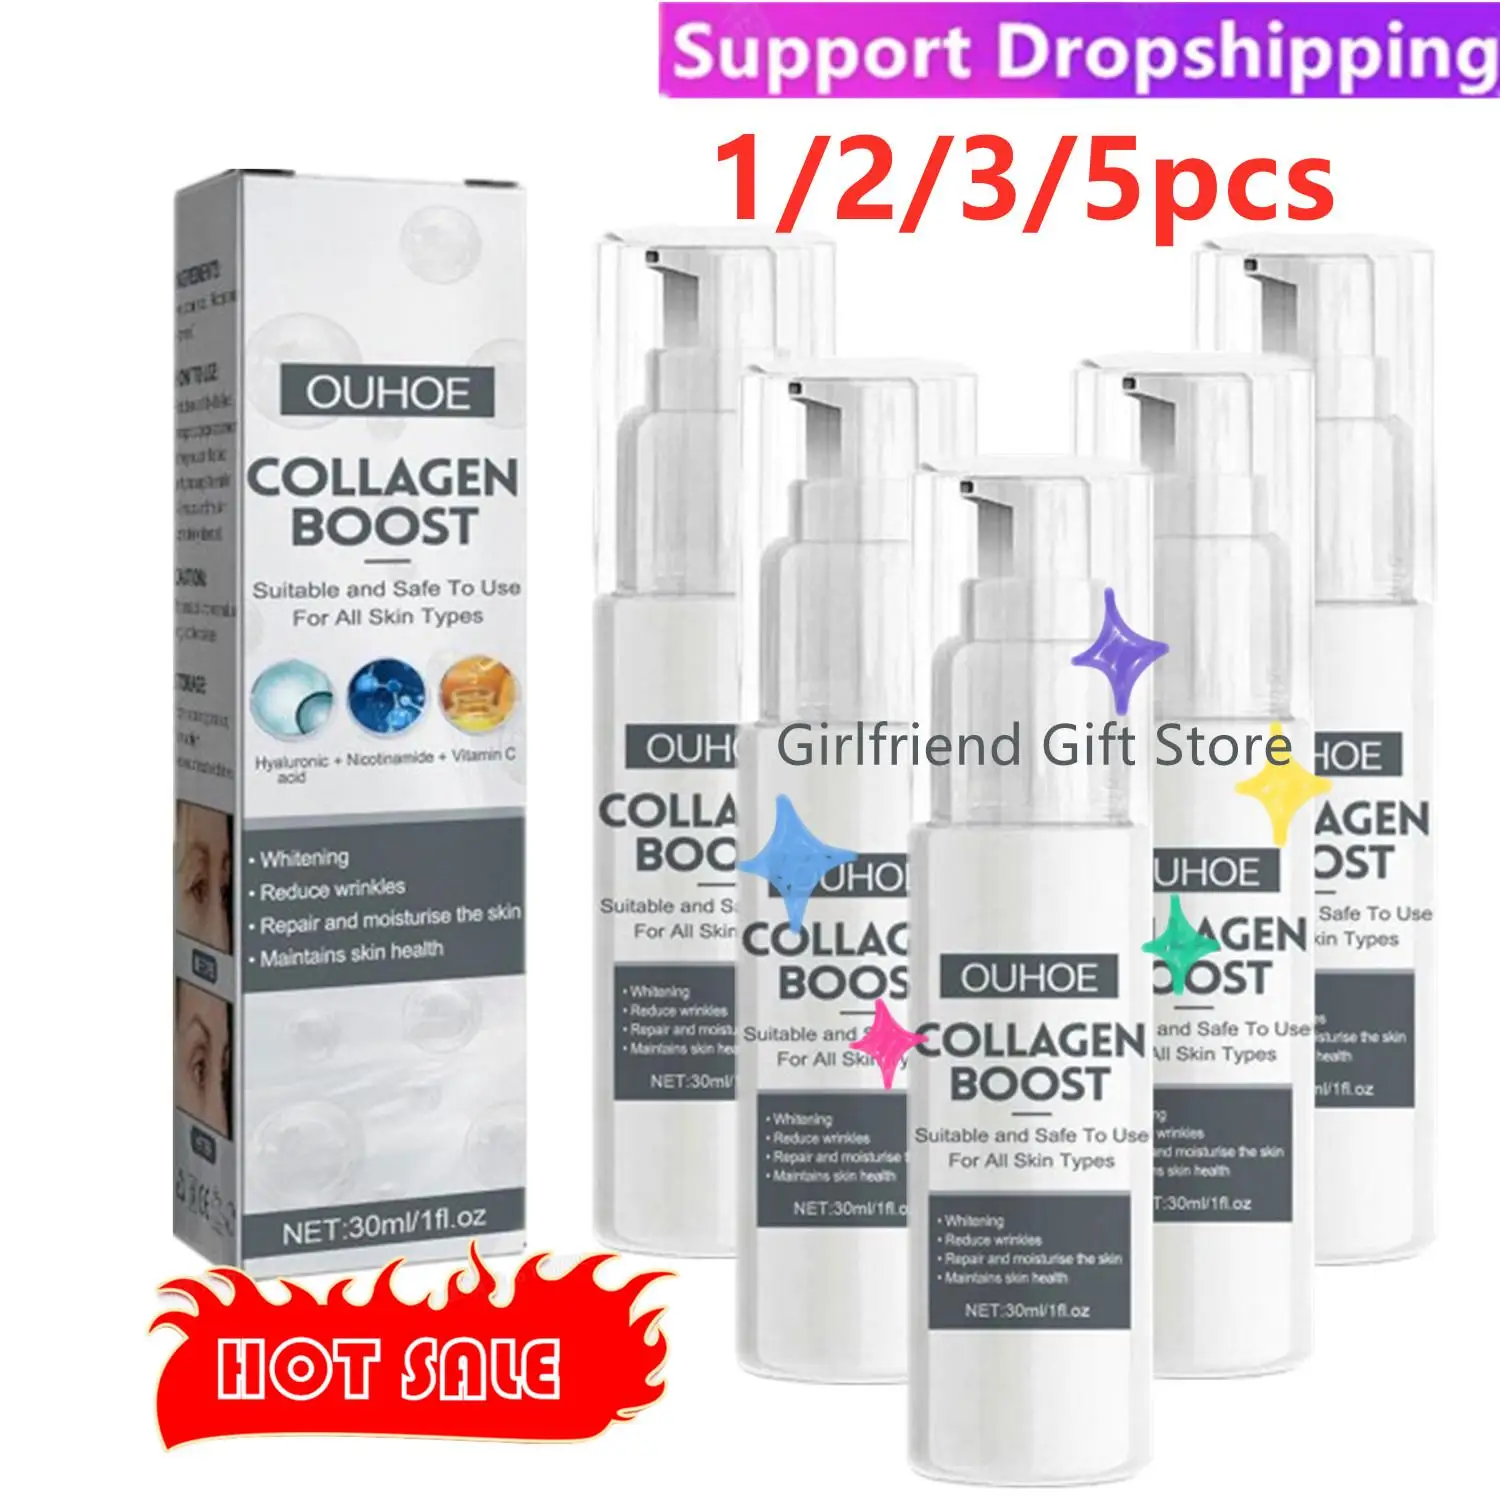 1/2/3/5pcs Collagen Boost Serum Anti-Aging Dark Spot Corrector Wrinkle Cream Face Skin Care For Women And Men 30ml